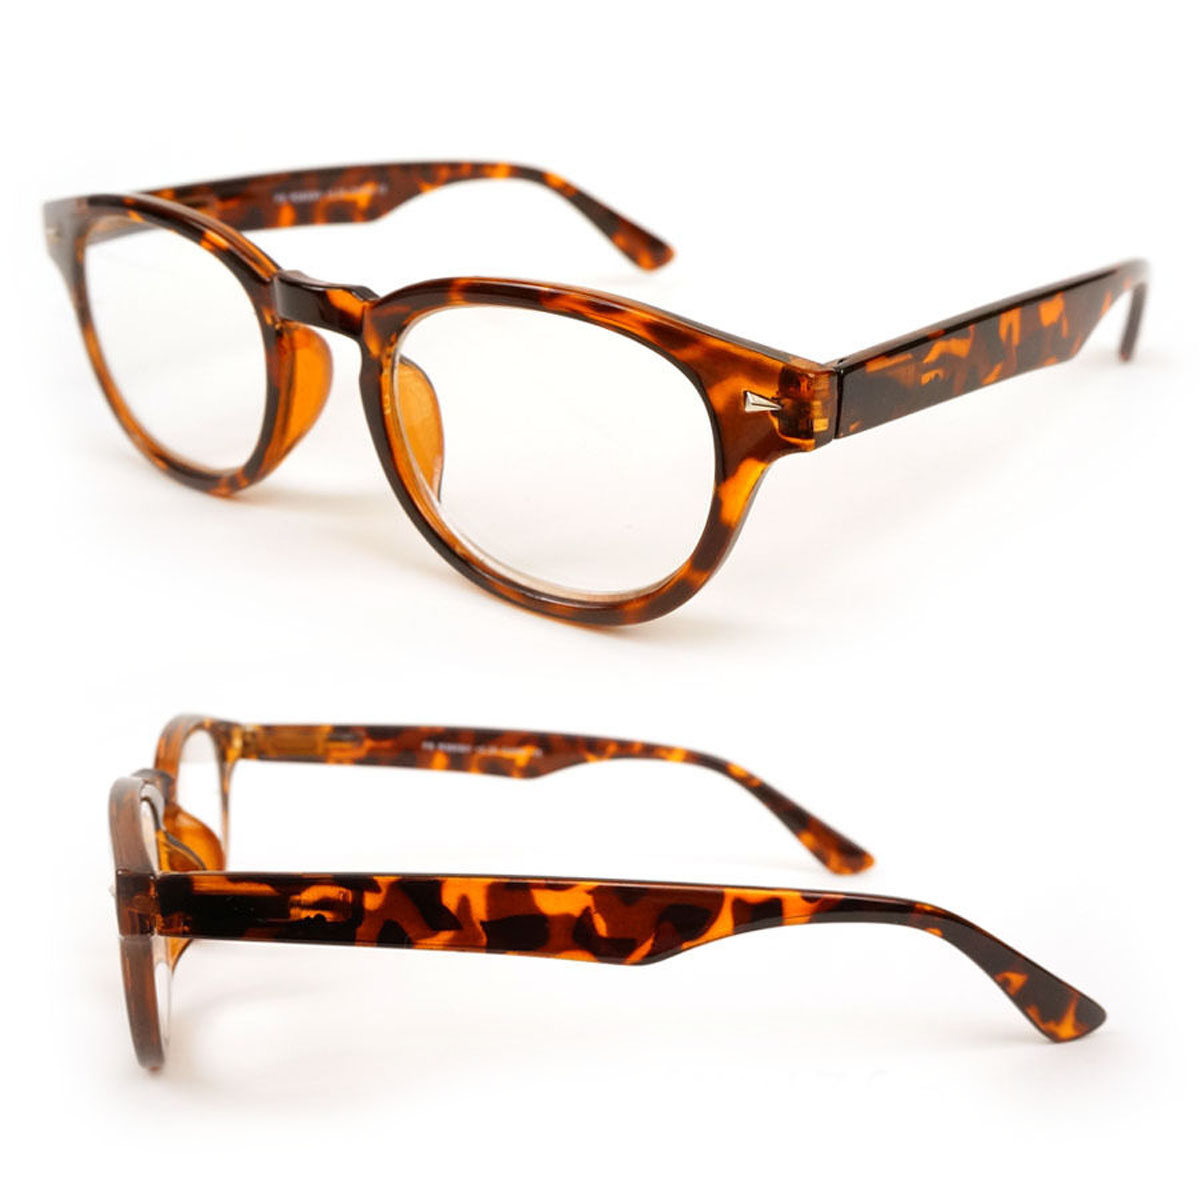 Medium Round Classic Frame Reading Glasses Geek Retro Vintage Style 100-375 - Brown, +2.00